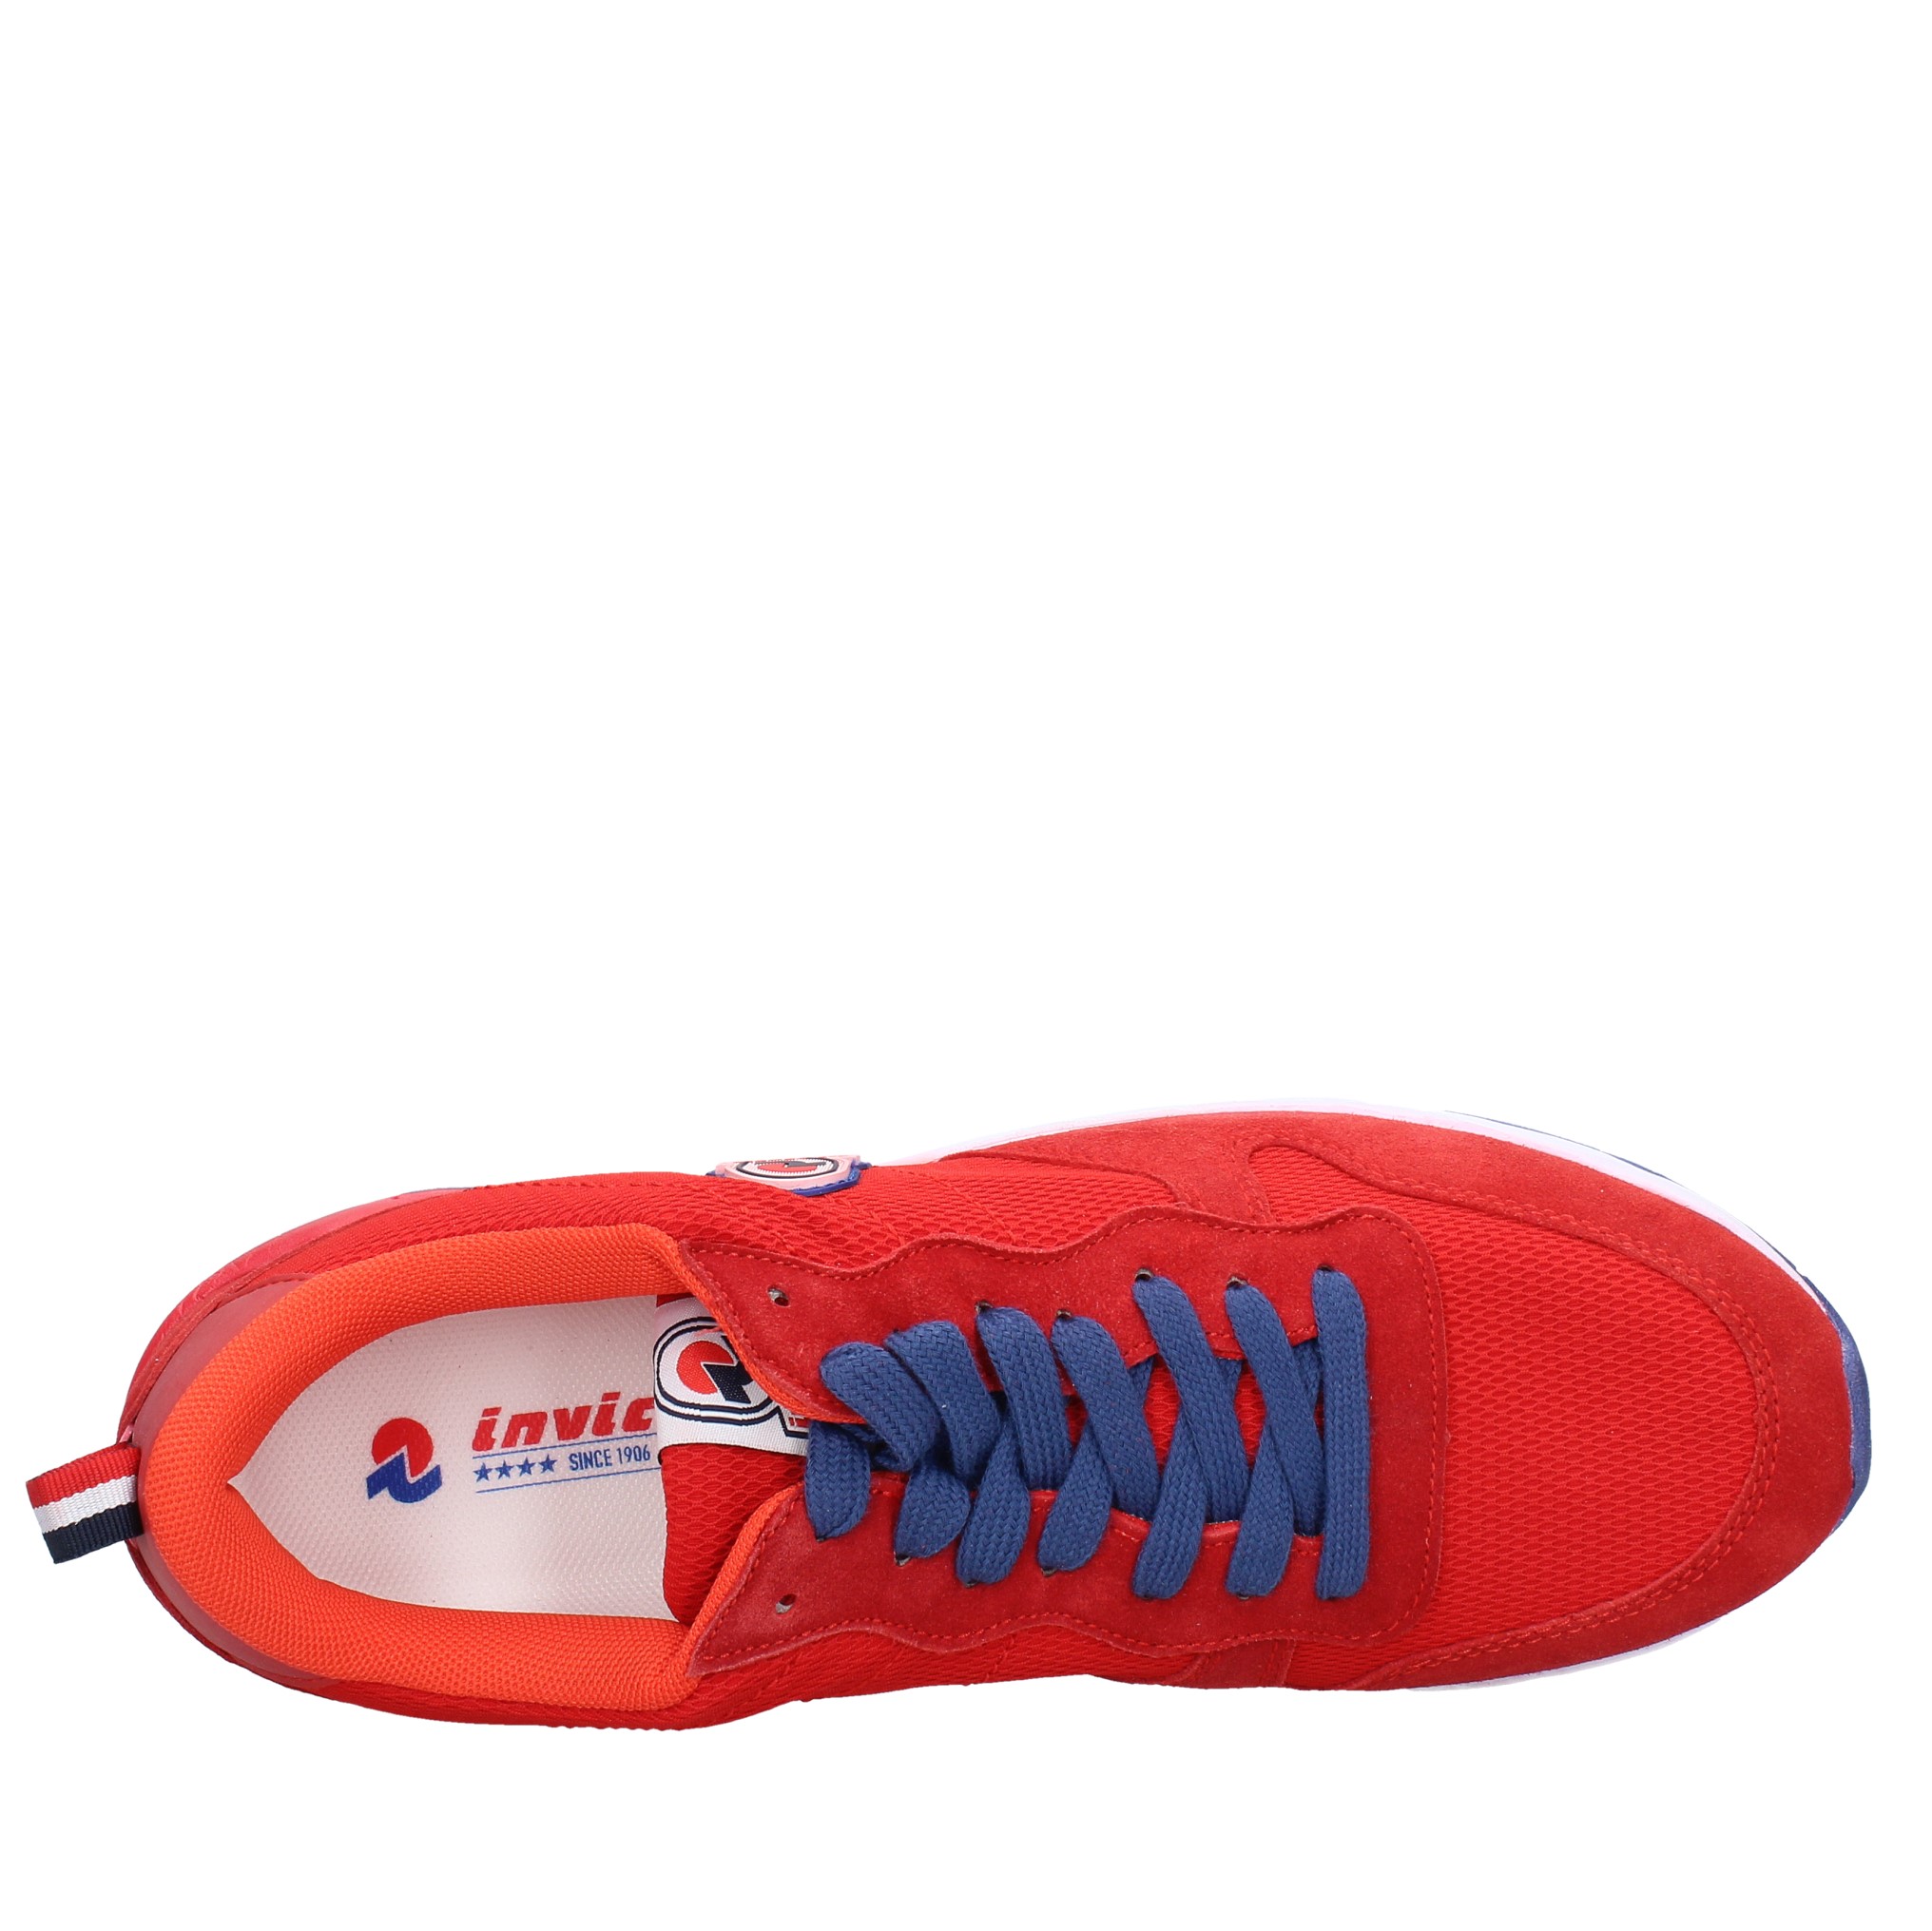 Trainers Red - INVICTA - Ginevra calzature